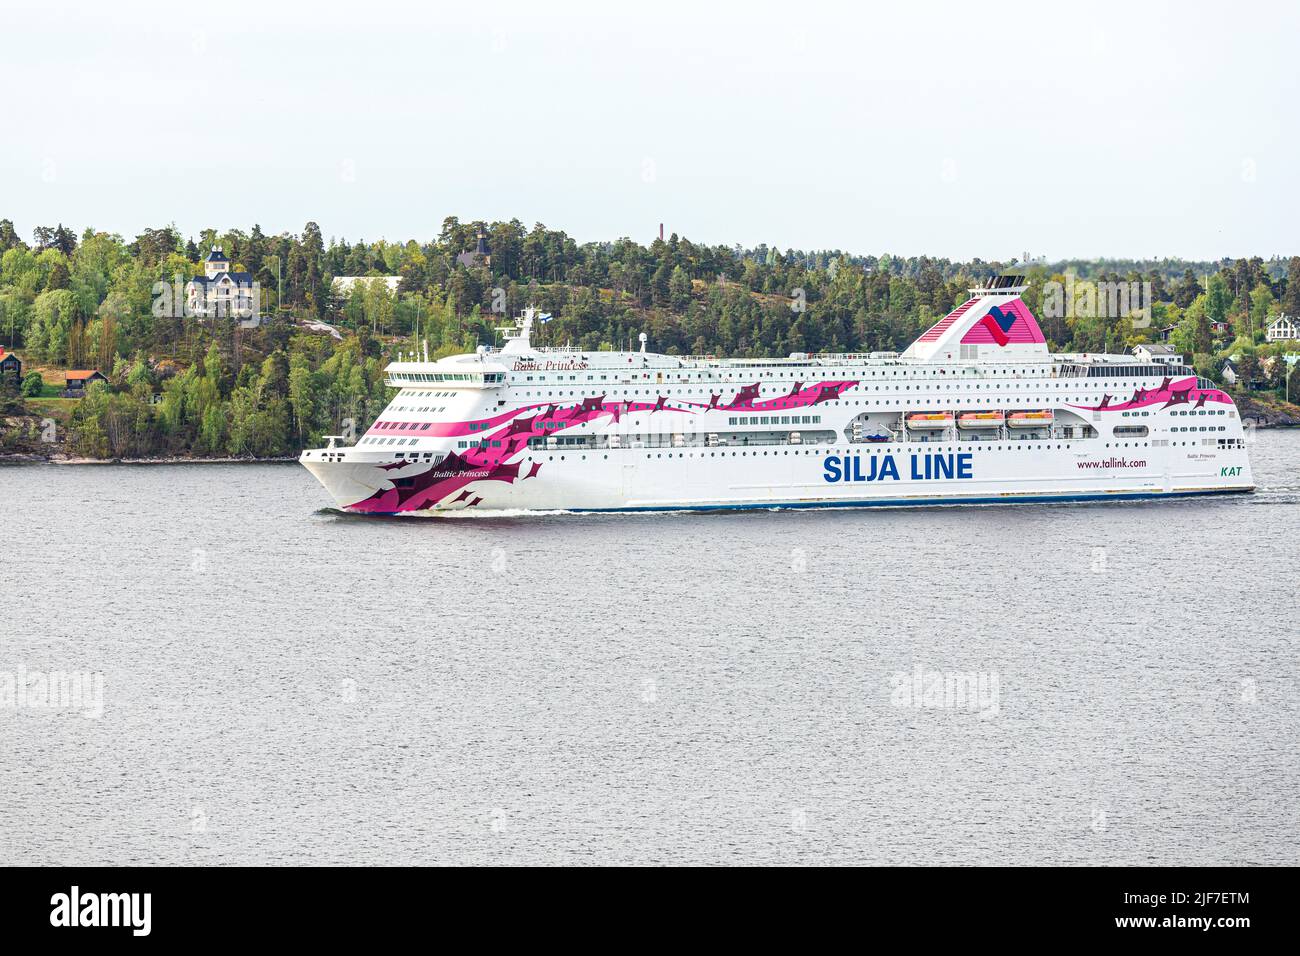 The MS Baltic Princess of the Silja Line passing through the Stockholm Archipelago - here Kummelnass, Sweden. Stock Photo